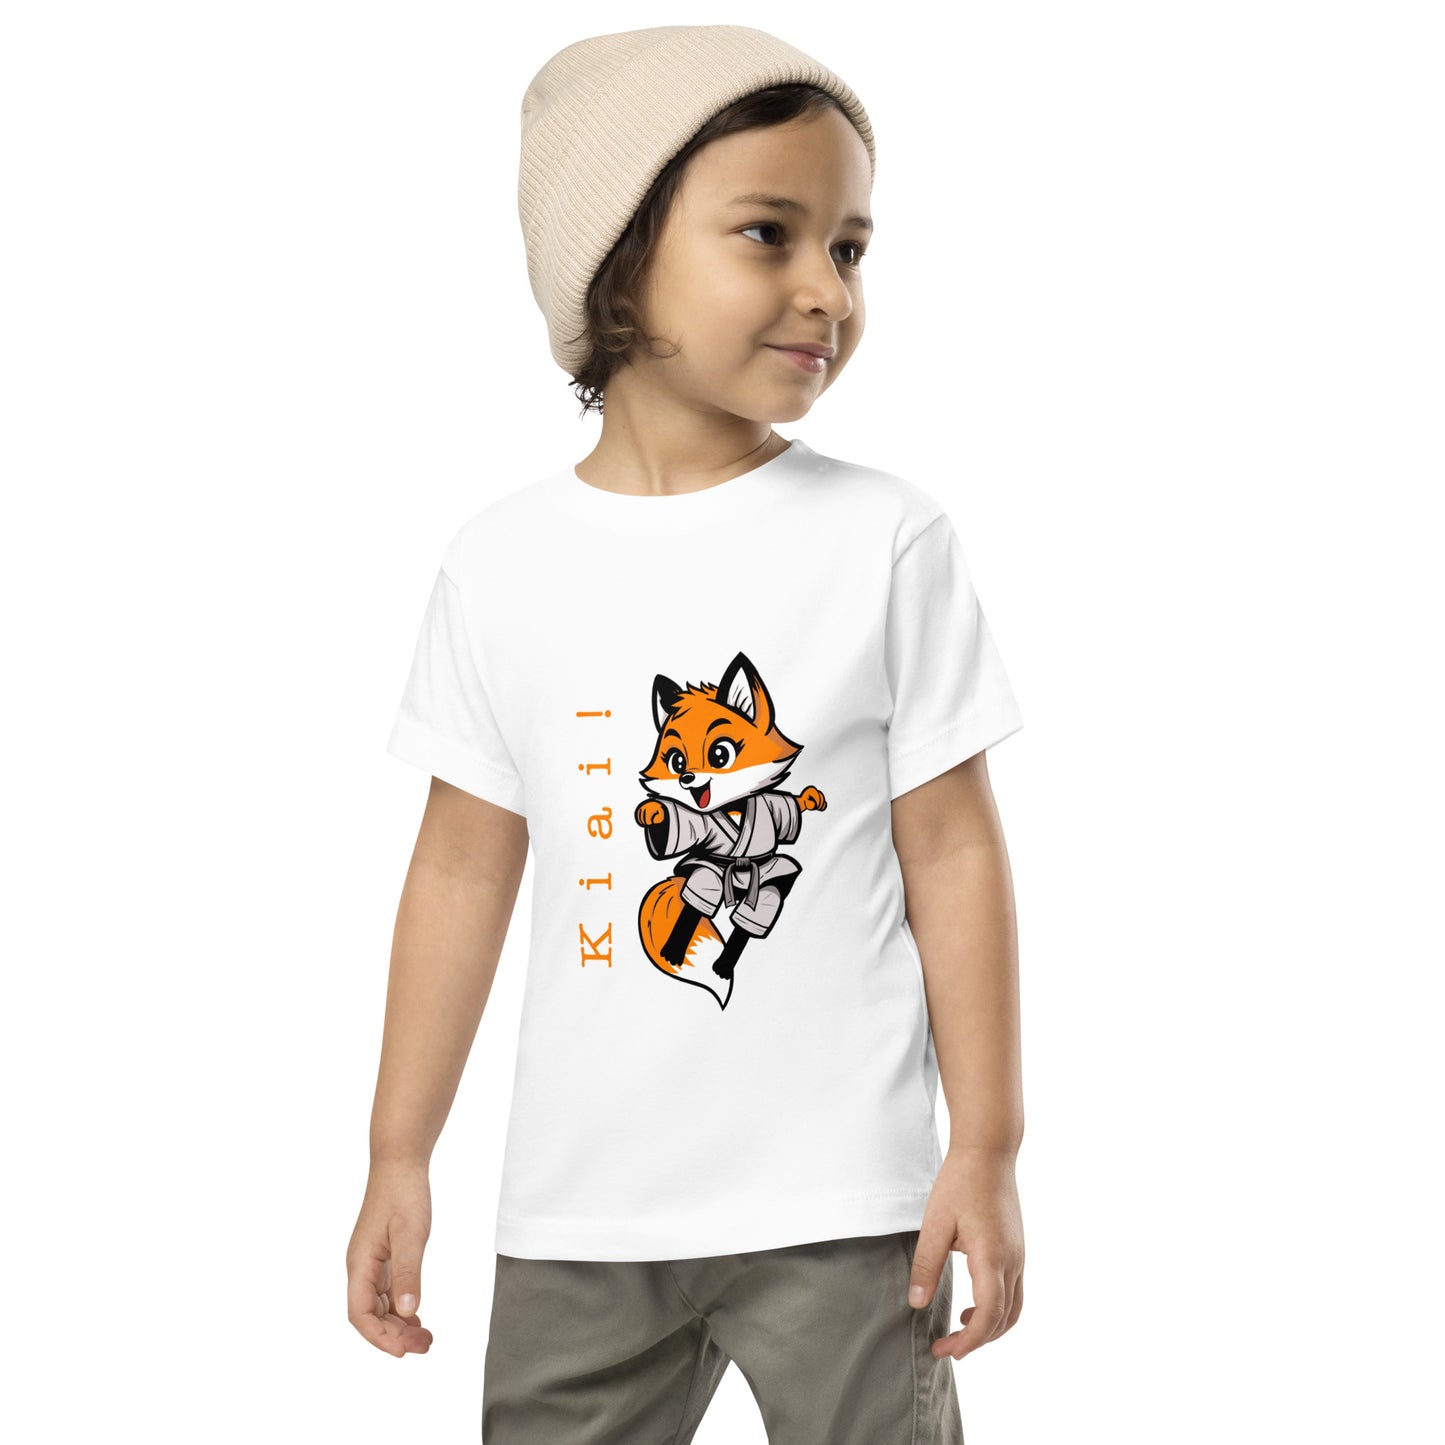 Karate Fox - Toddler Short Sleeve Tee